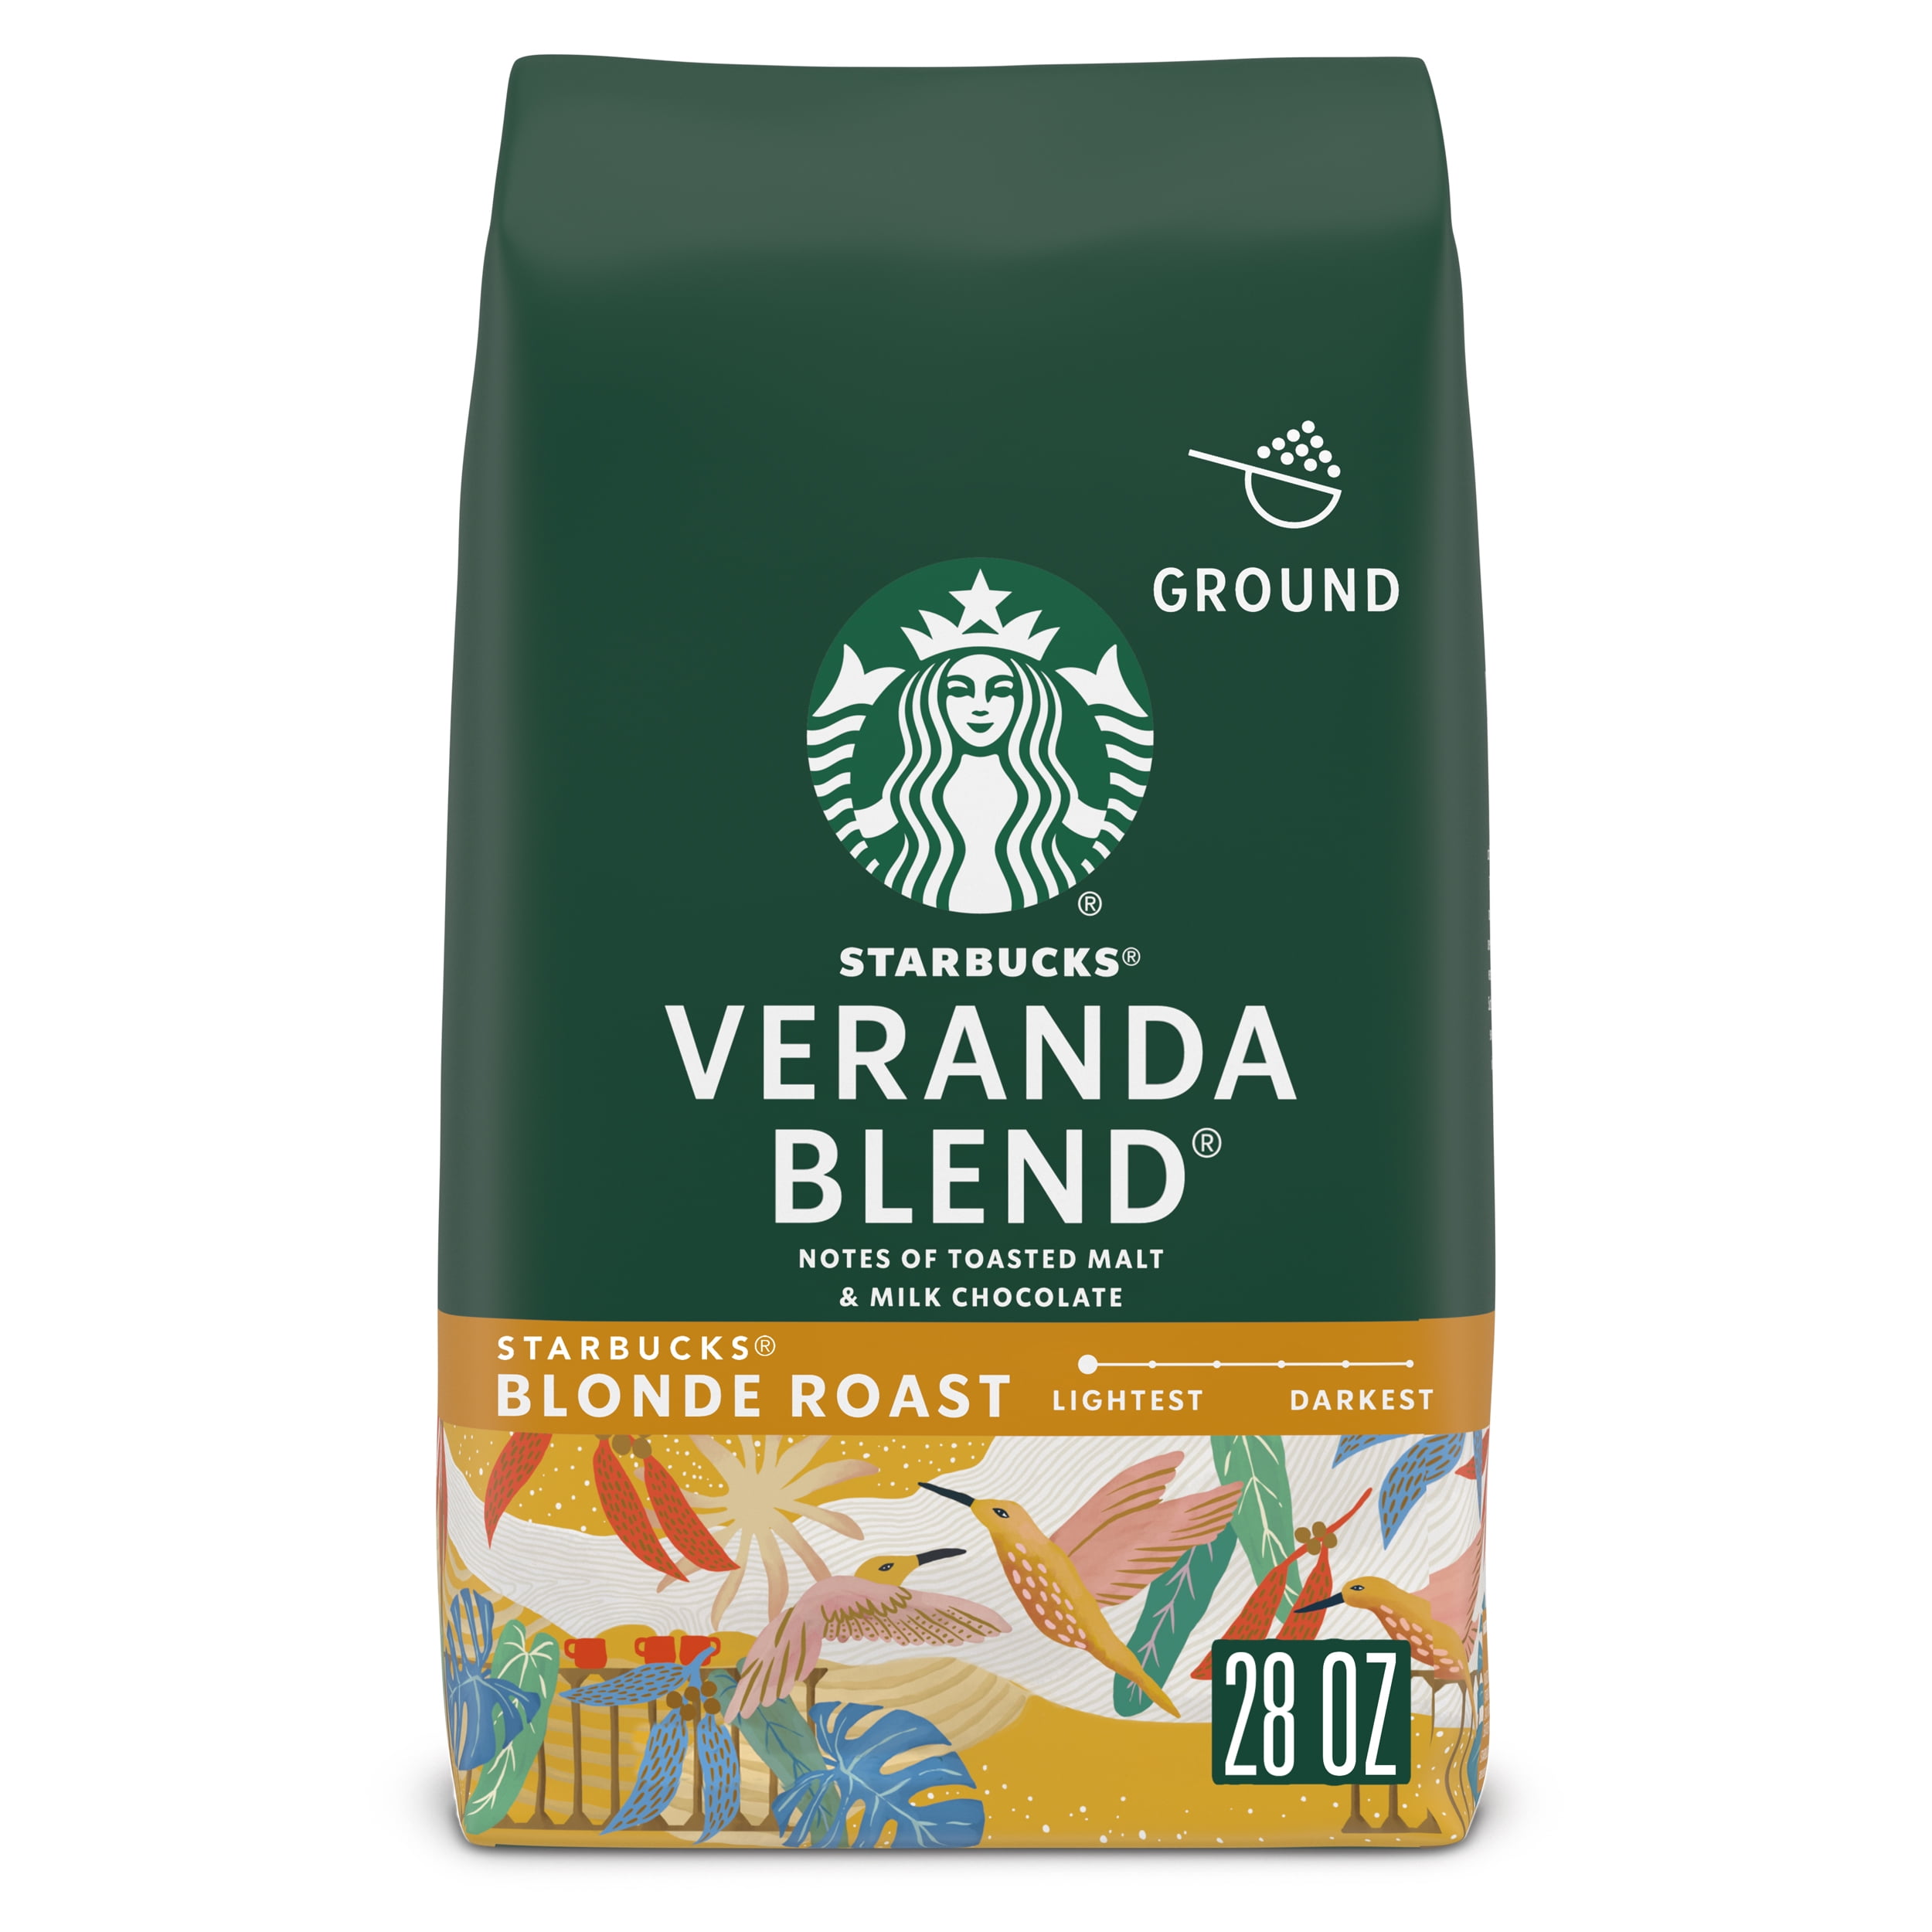 Starbucks Veranda Blend, Ground Coffee, Starbucks Blonde Roast, 28 oz